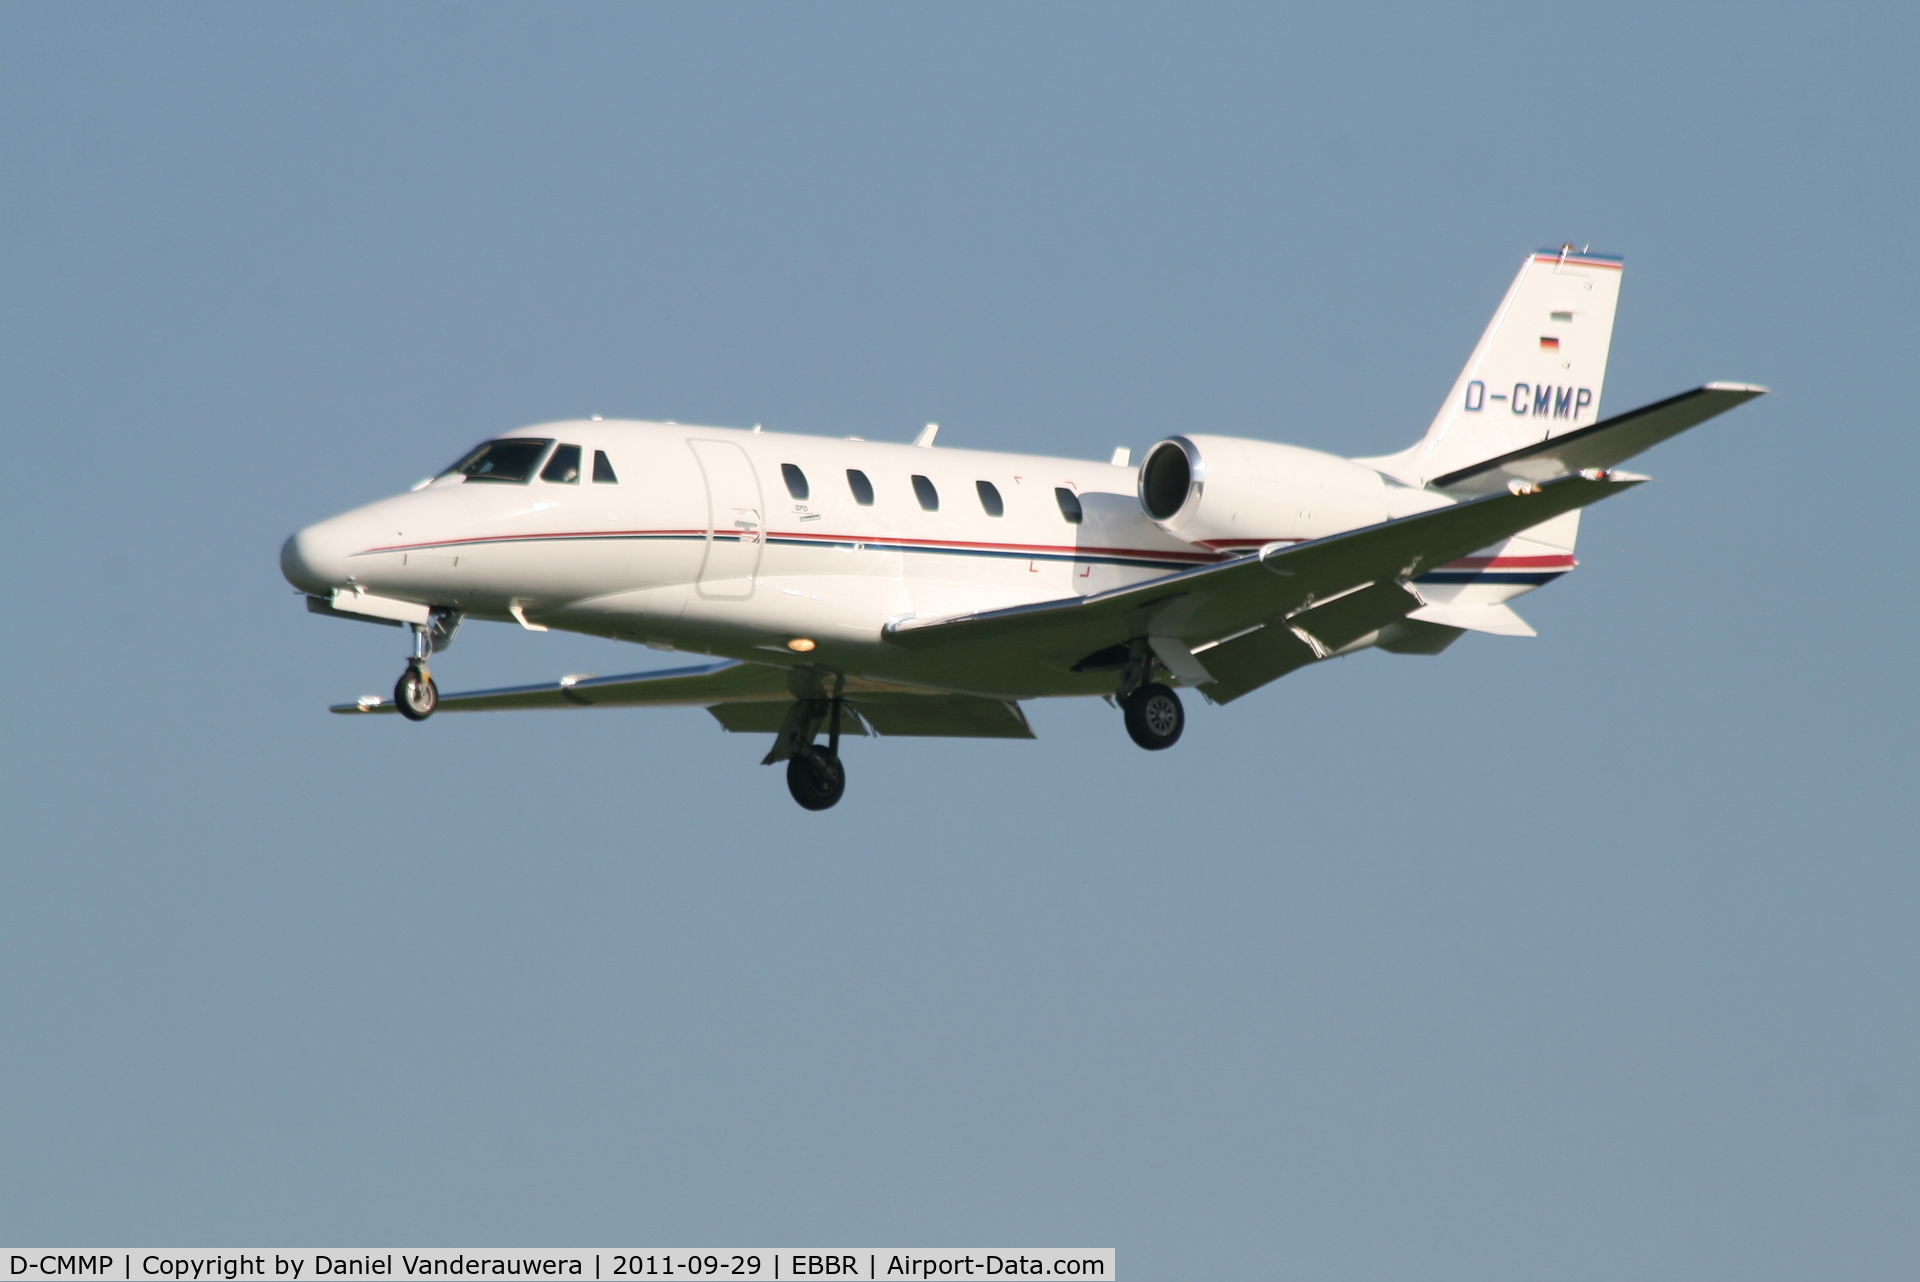 D-CMMP, 2007 Cessna 560 Citation Excel XLS C/N 560-5719, Arrival to RWY 25L